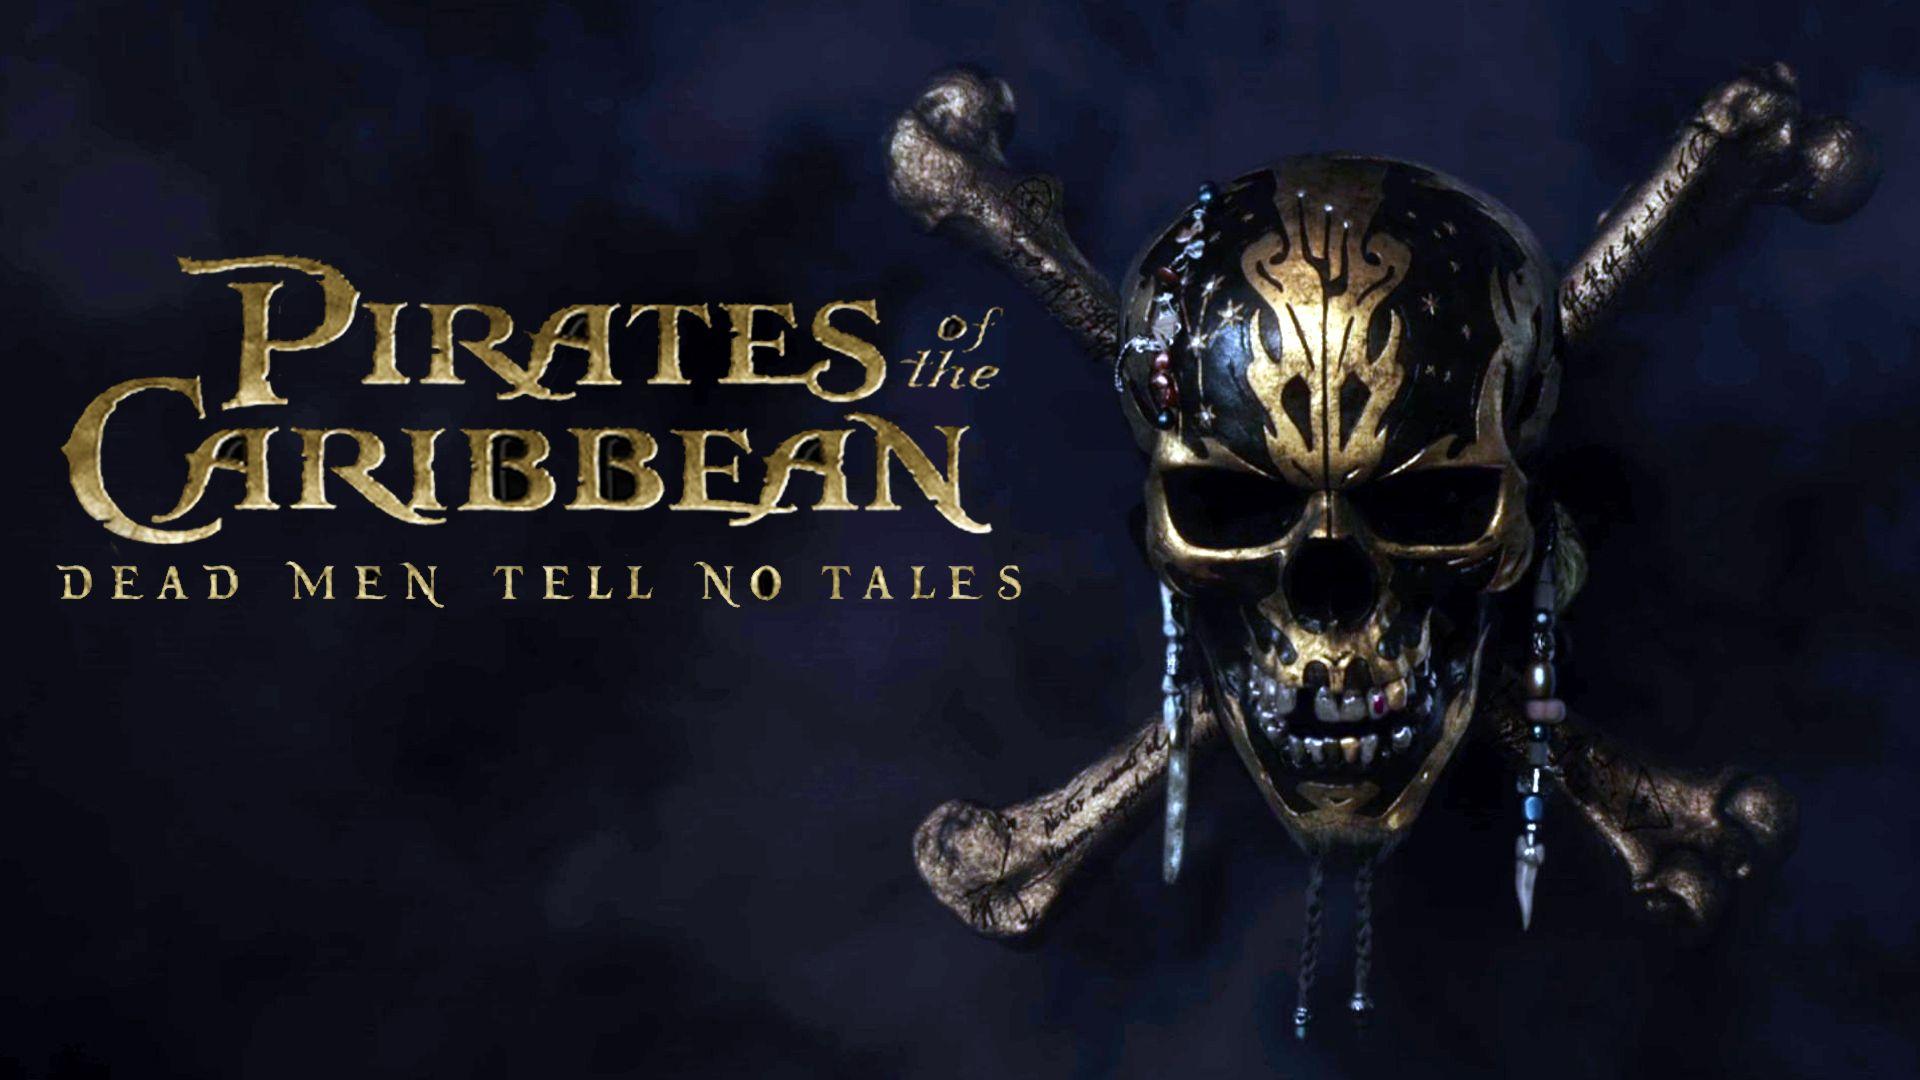 Premium AI Image | Pirates of the caribbean wallpapers